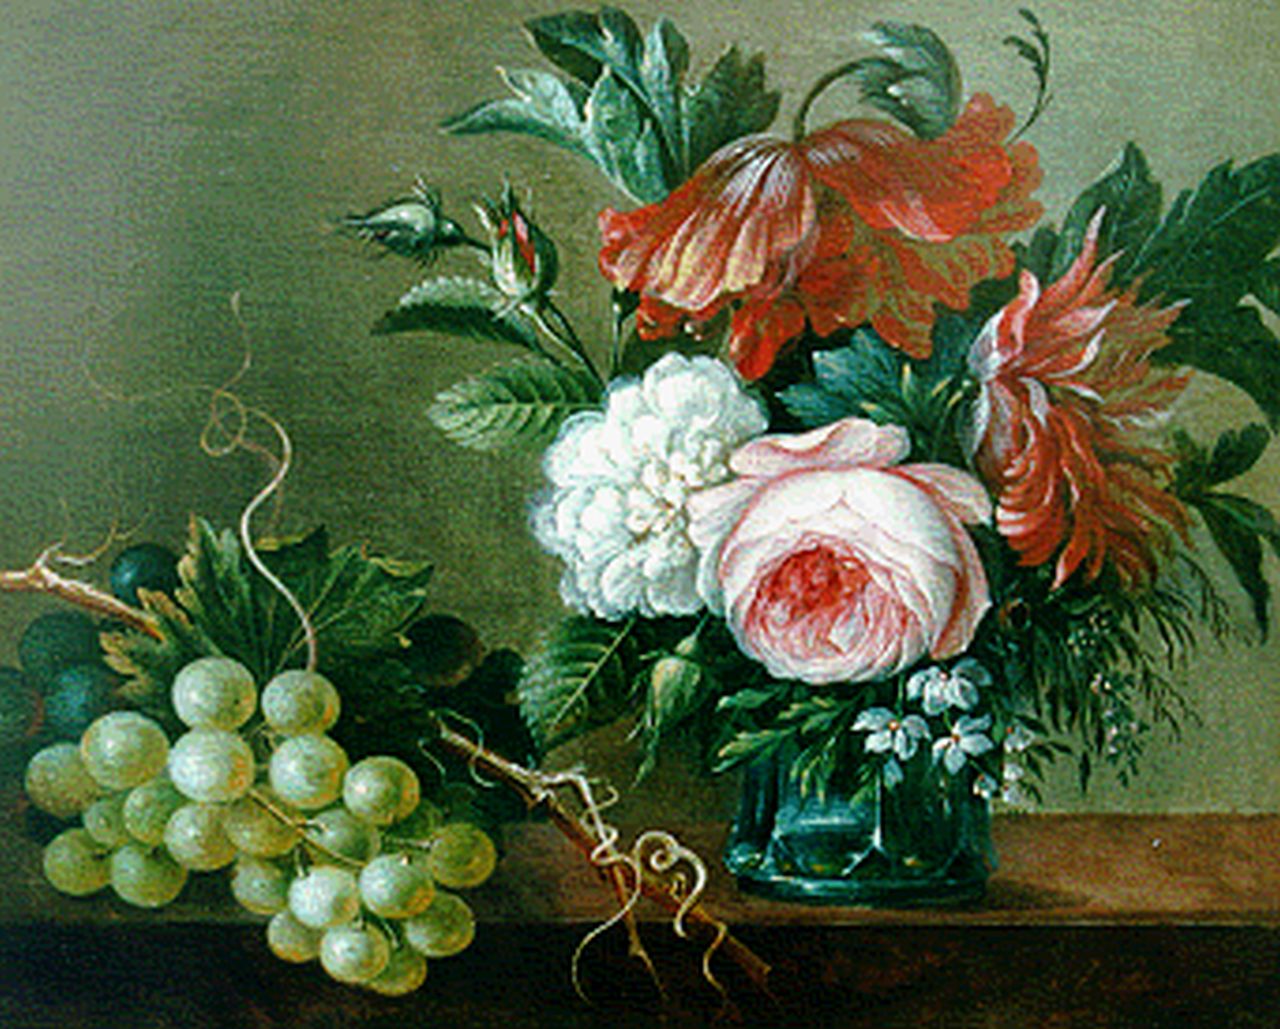 Adrianus Apol | Still life with flowers and grapes, Öl auf Holz, 22,9 x 28,3 cm, signed l.r. und datiert 1845